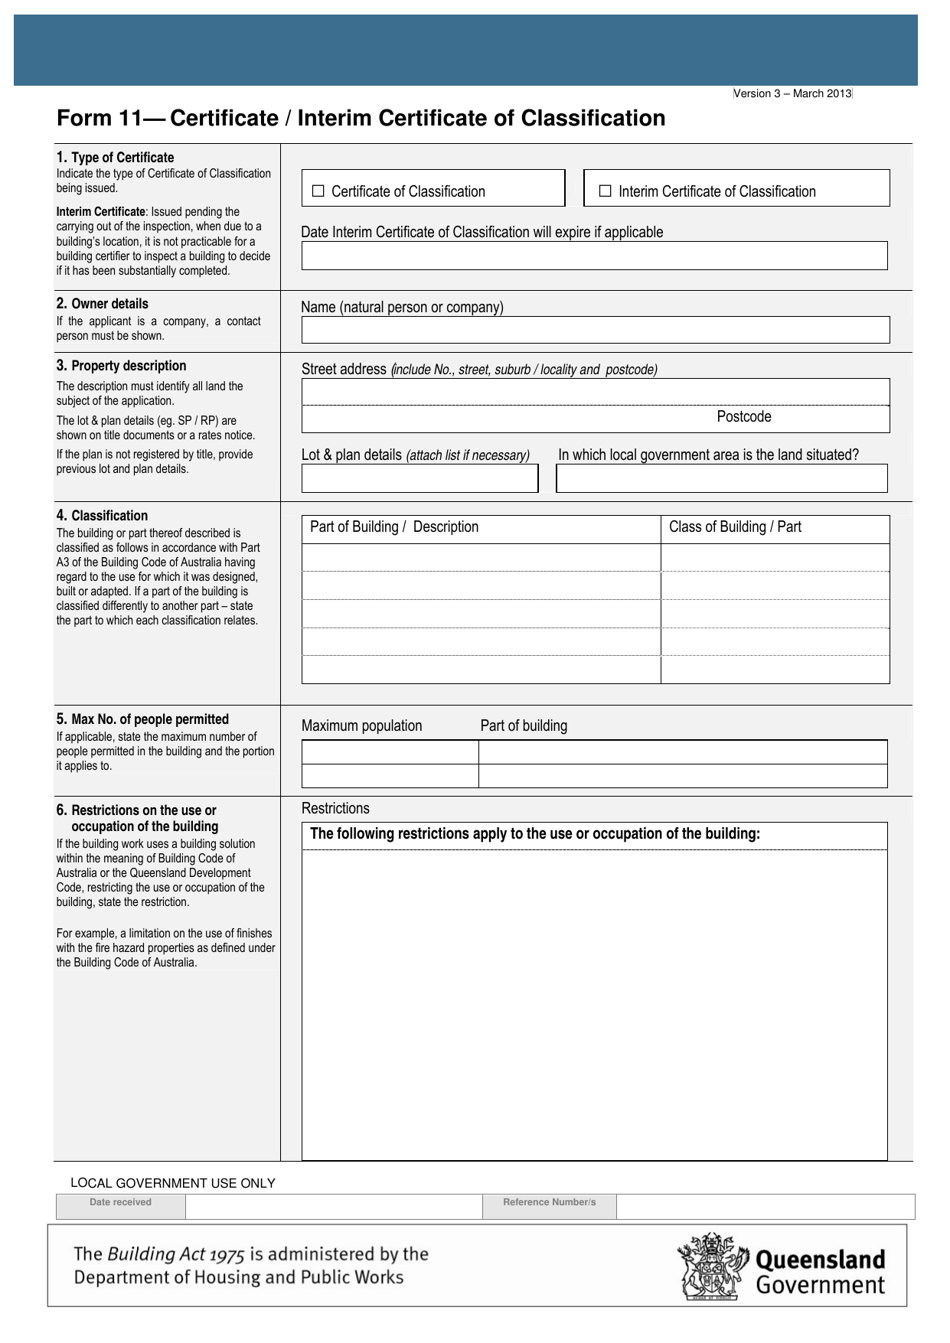 Form 11 Certificate/Interim Certificate of Classification - Queensland, Australia, Page 1